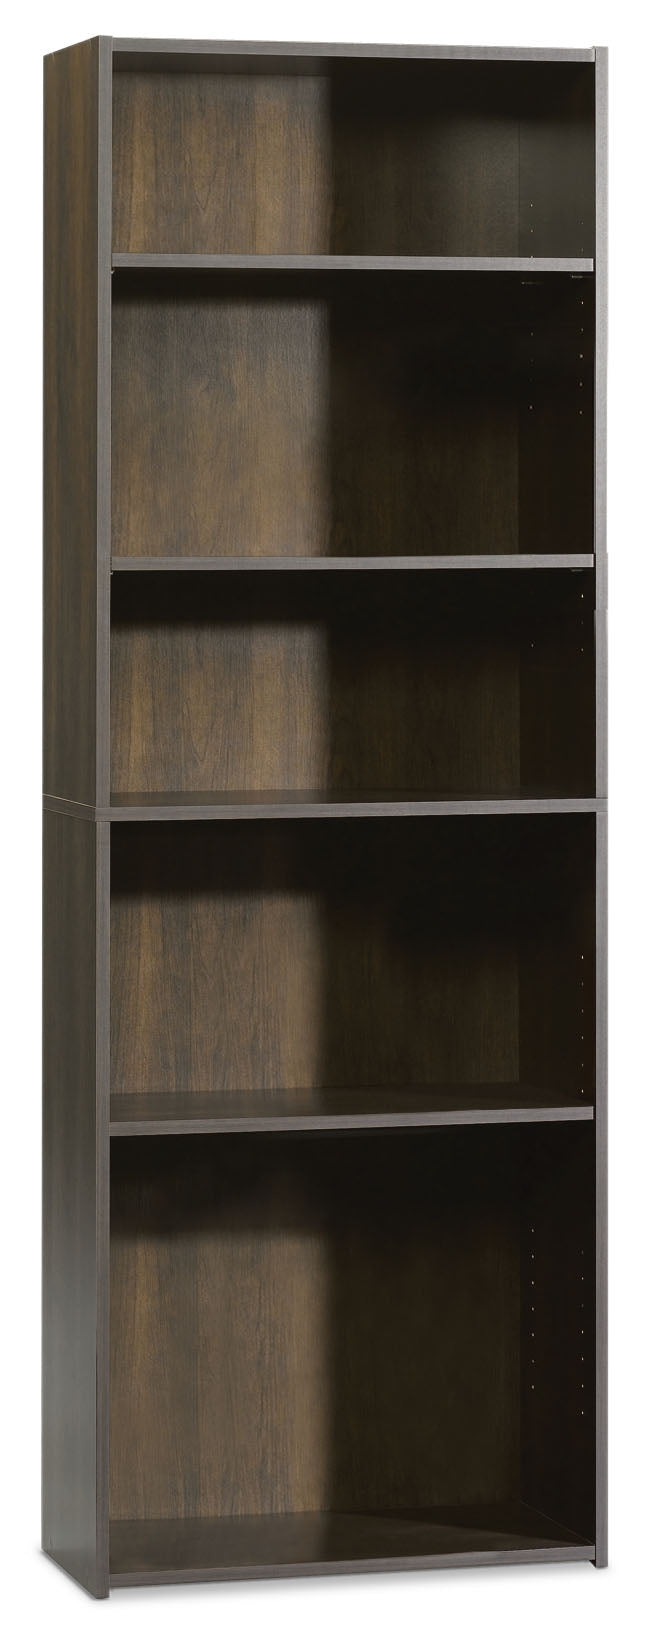 Boston 5-Shelf Bookcase - Country style Bookcase in Dark Brown